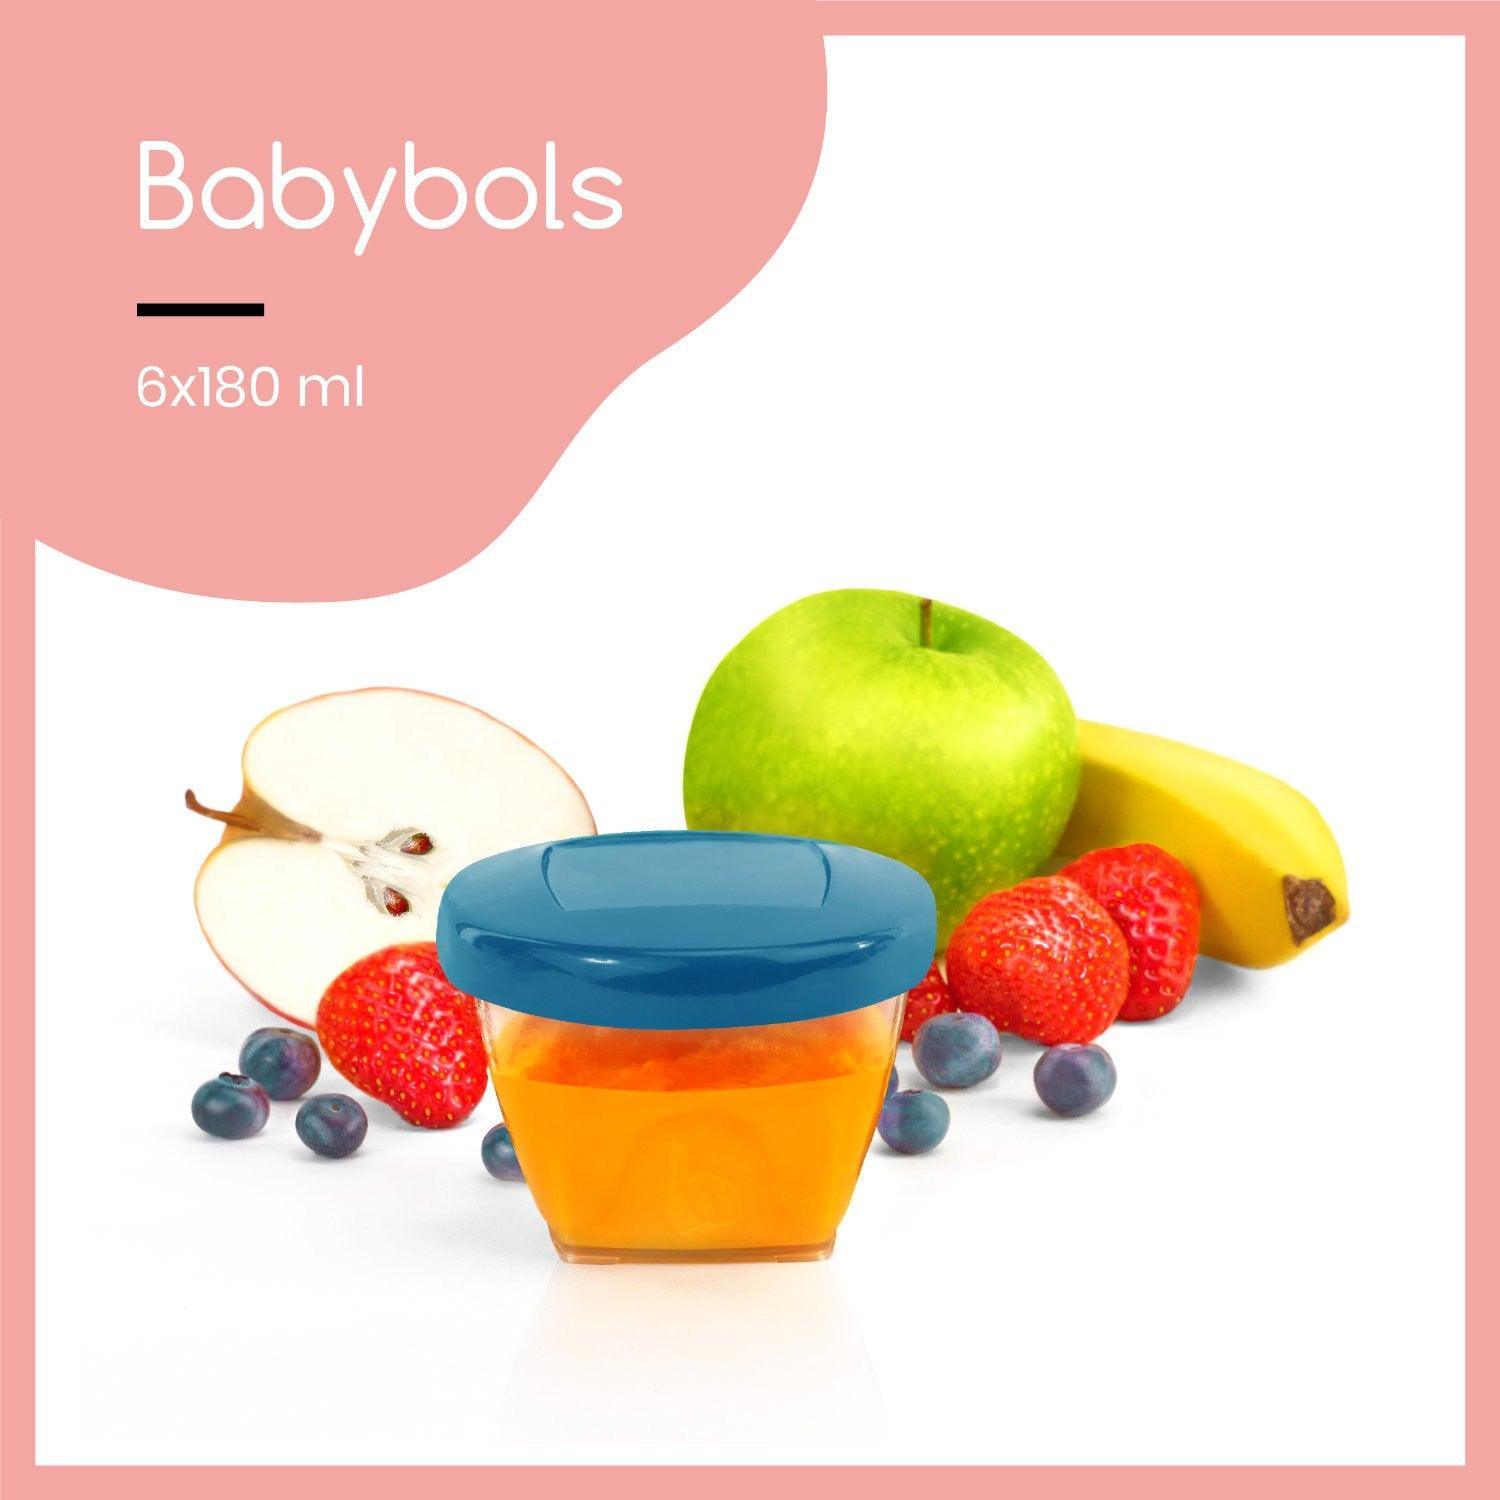 Babymoov - Babybols - Food Containers 180ml x 6 - Mari Kali Stores Cyprus